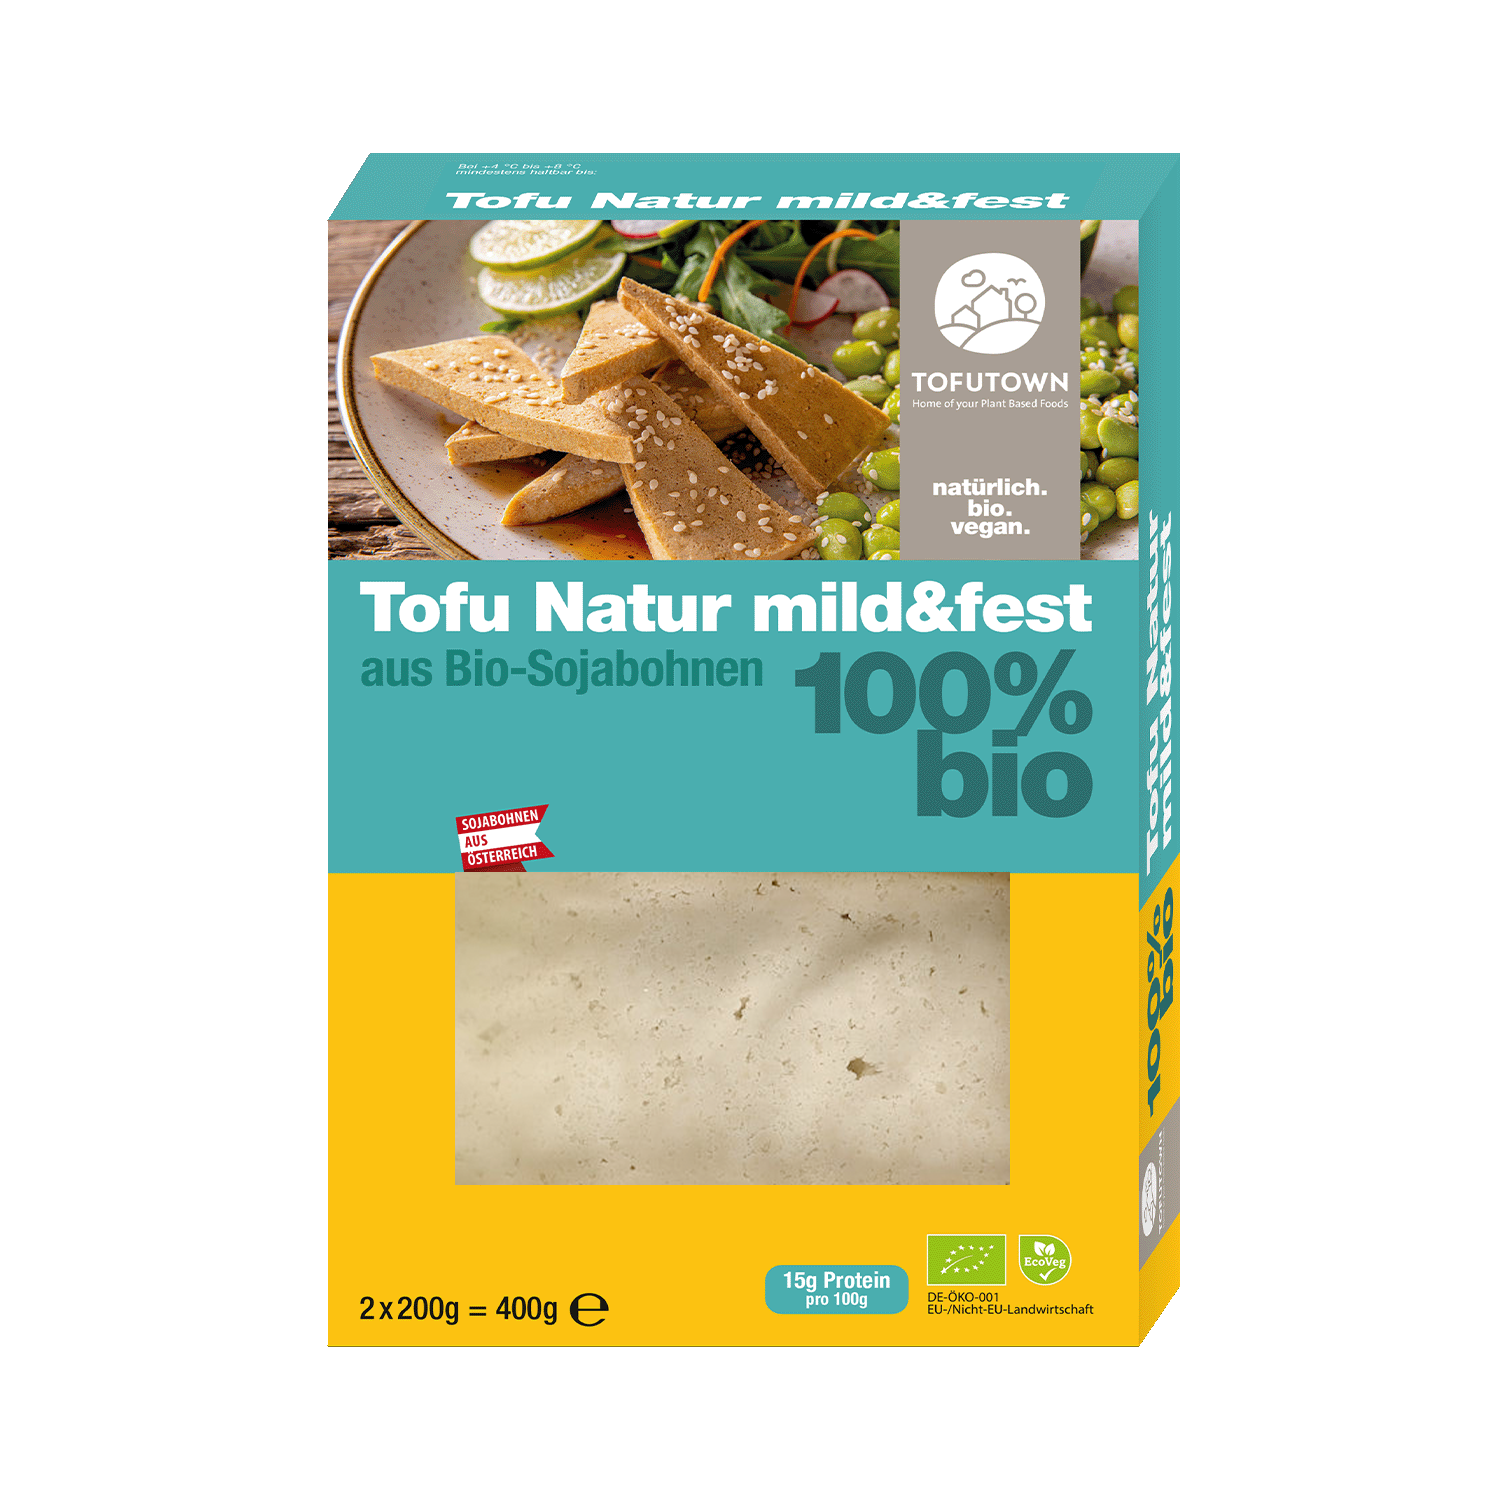 Tofu Nature mild & firm, Organic, 400g